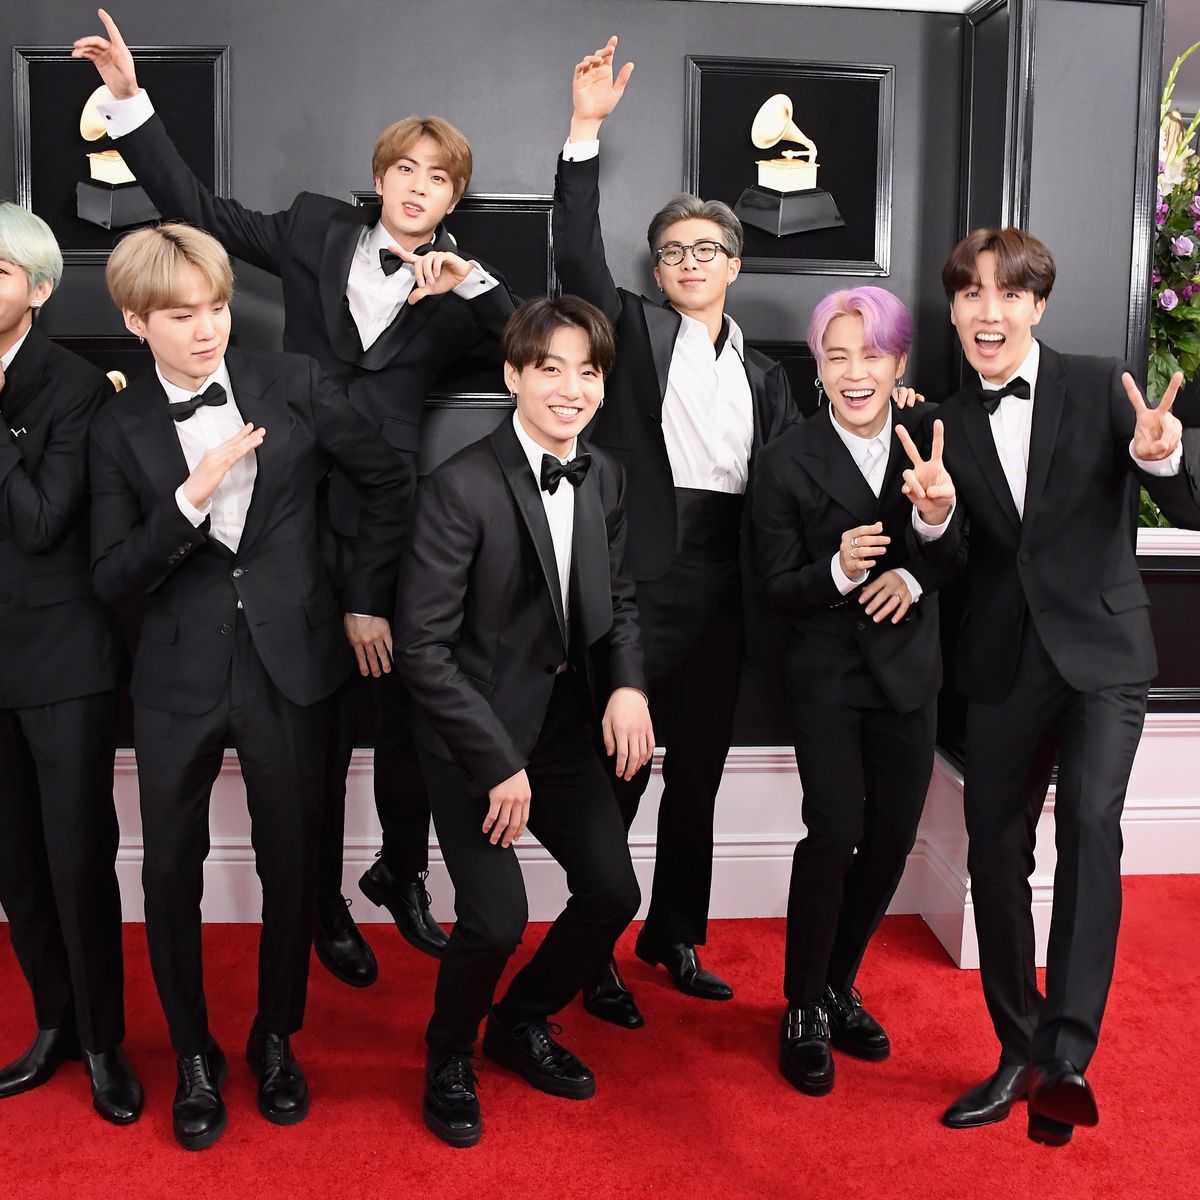 Grammy Awards 2020: BTS make K-pop history with stunning